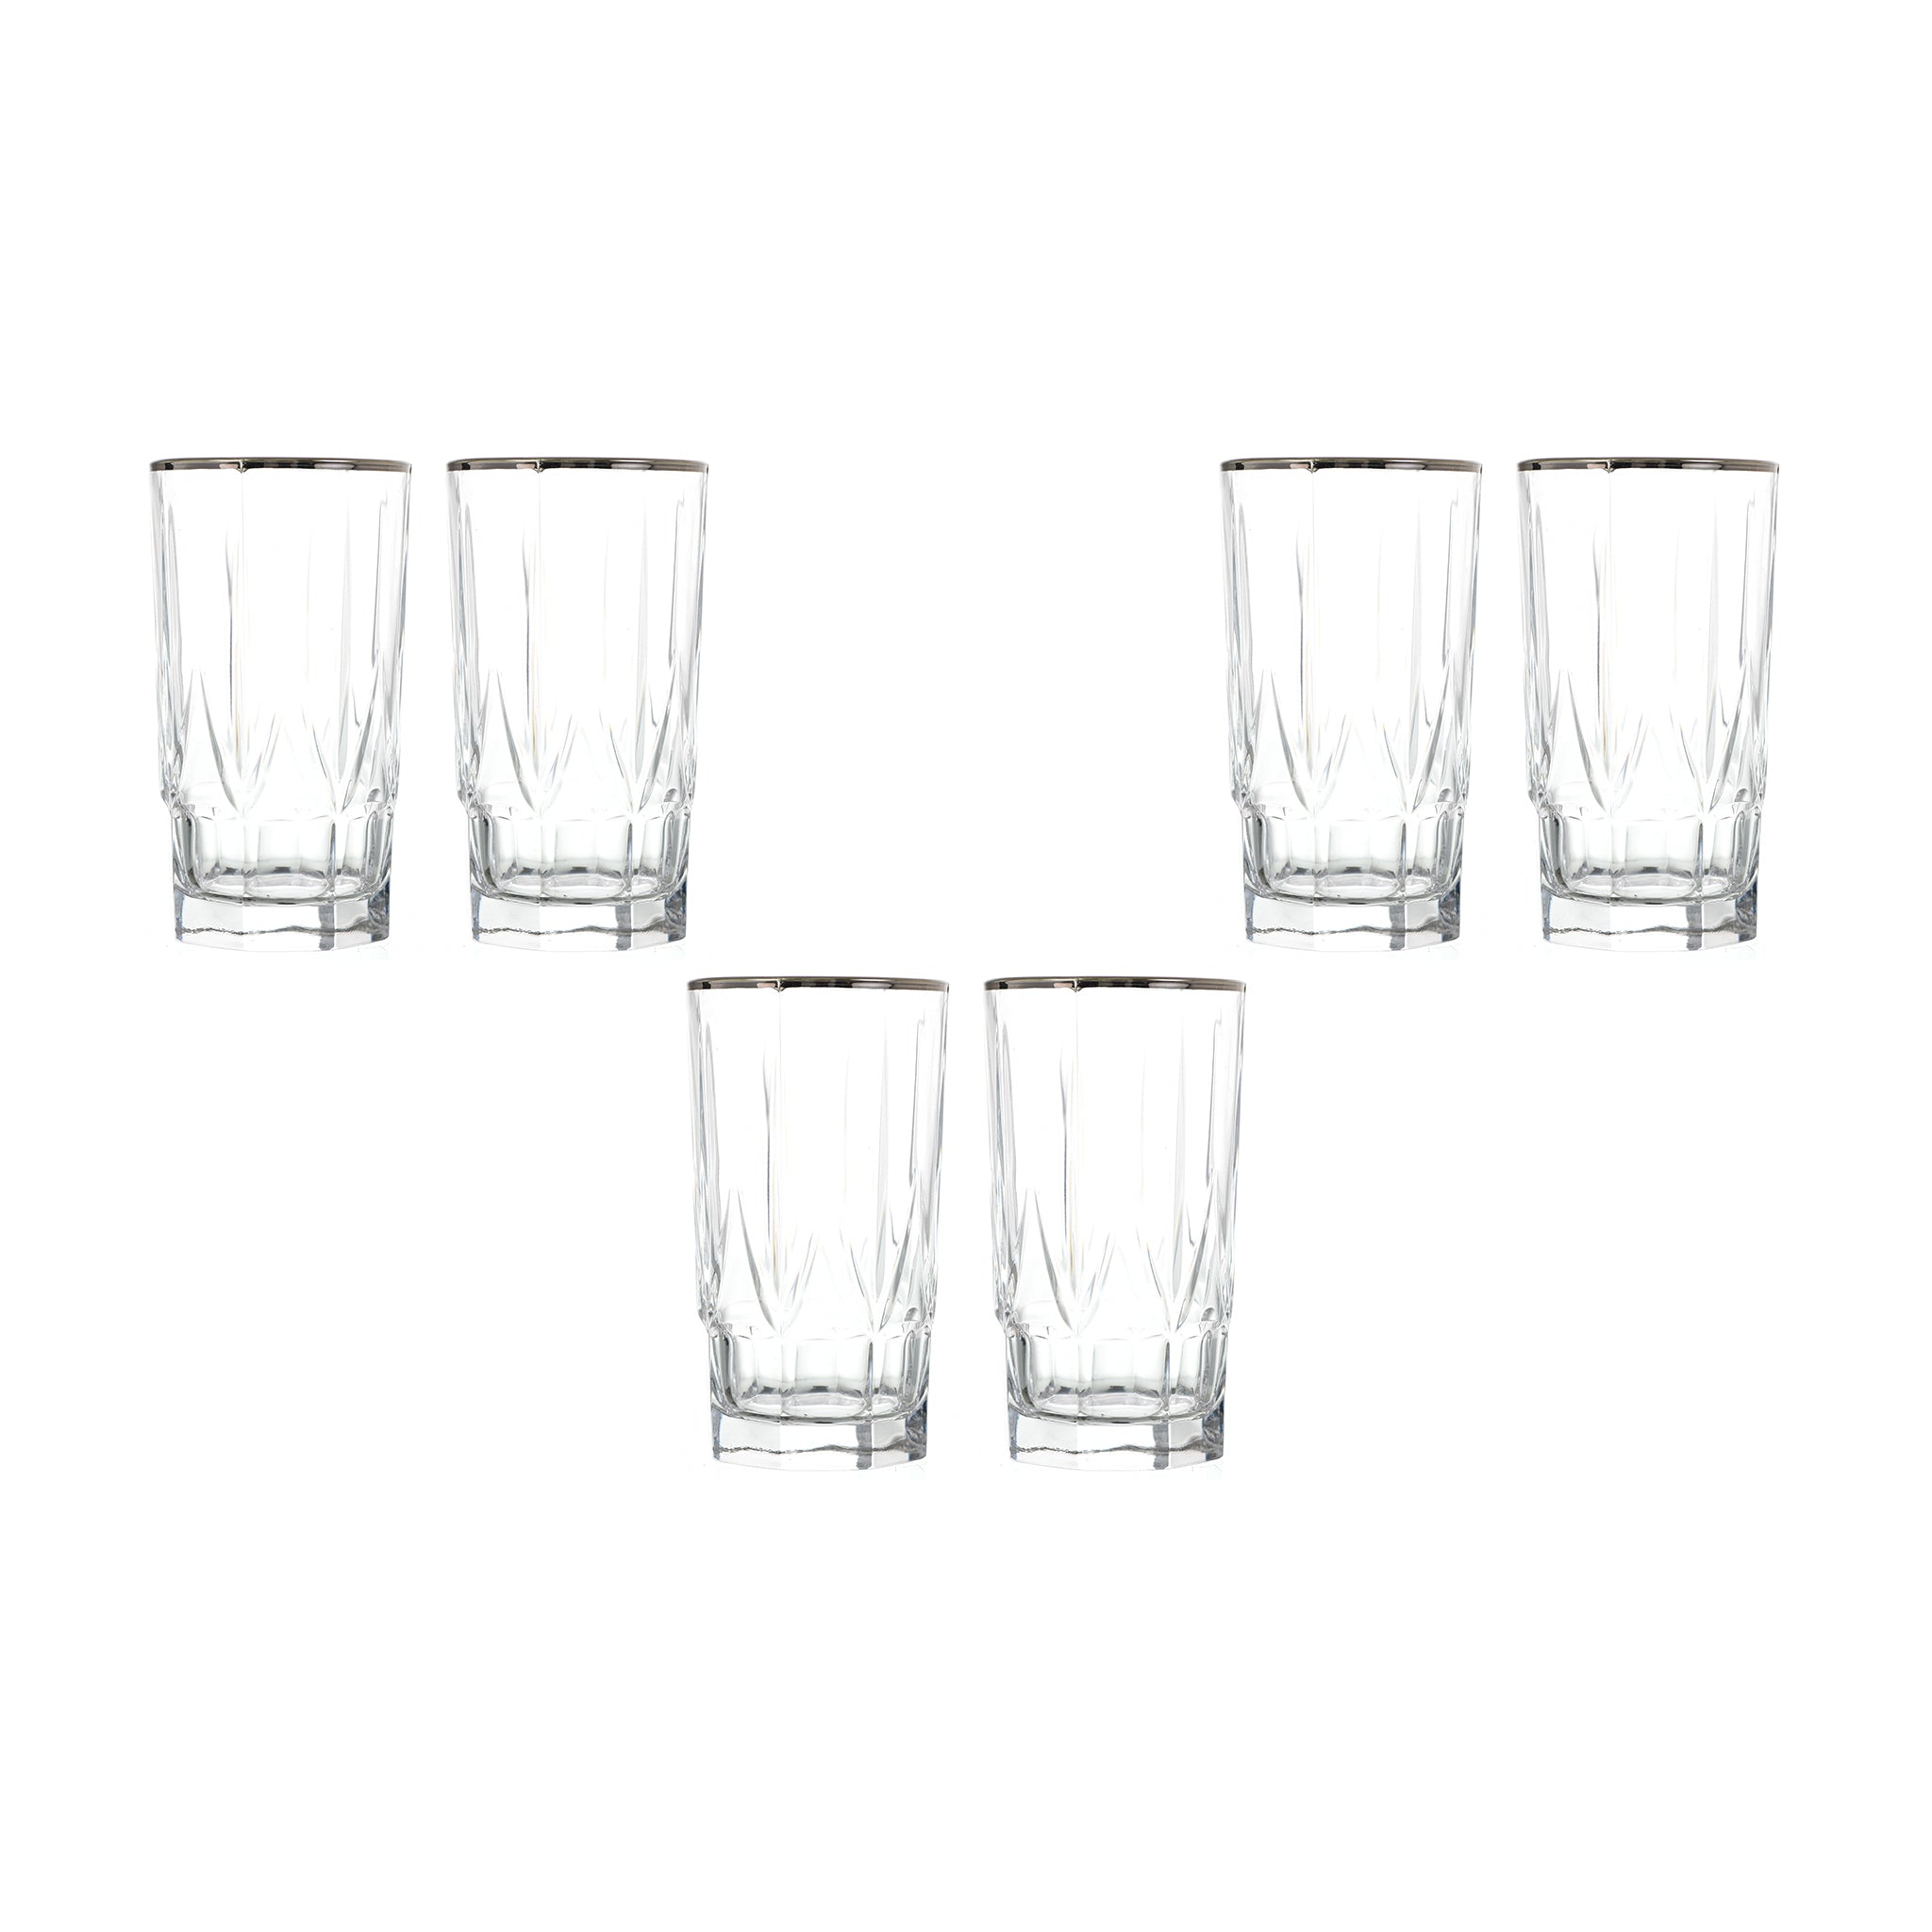 RCR - Highball Glass Set 6 Pieces - Silver - 370ml - 380003108